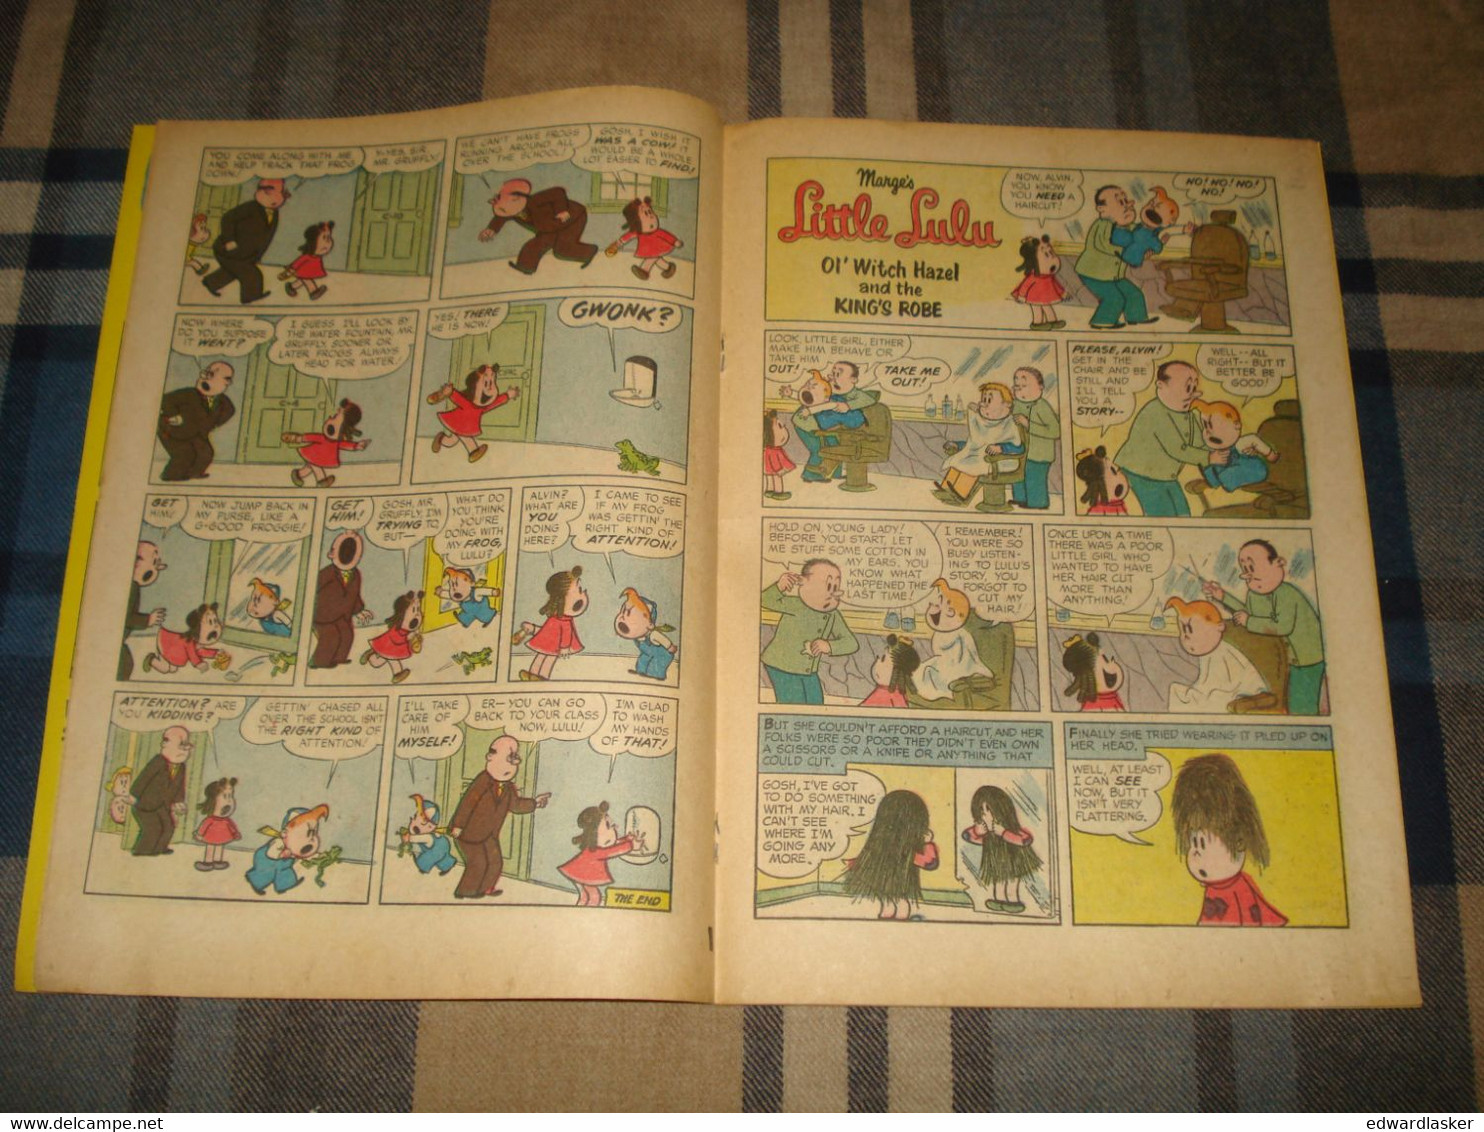 MARGE'S LITTLE LULU N°141 (comics VO) - Mars 1960 - Dell Comics - Bon état - Other Publishers